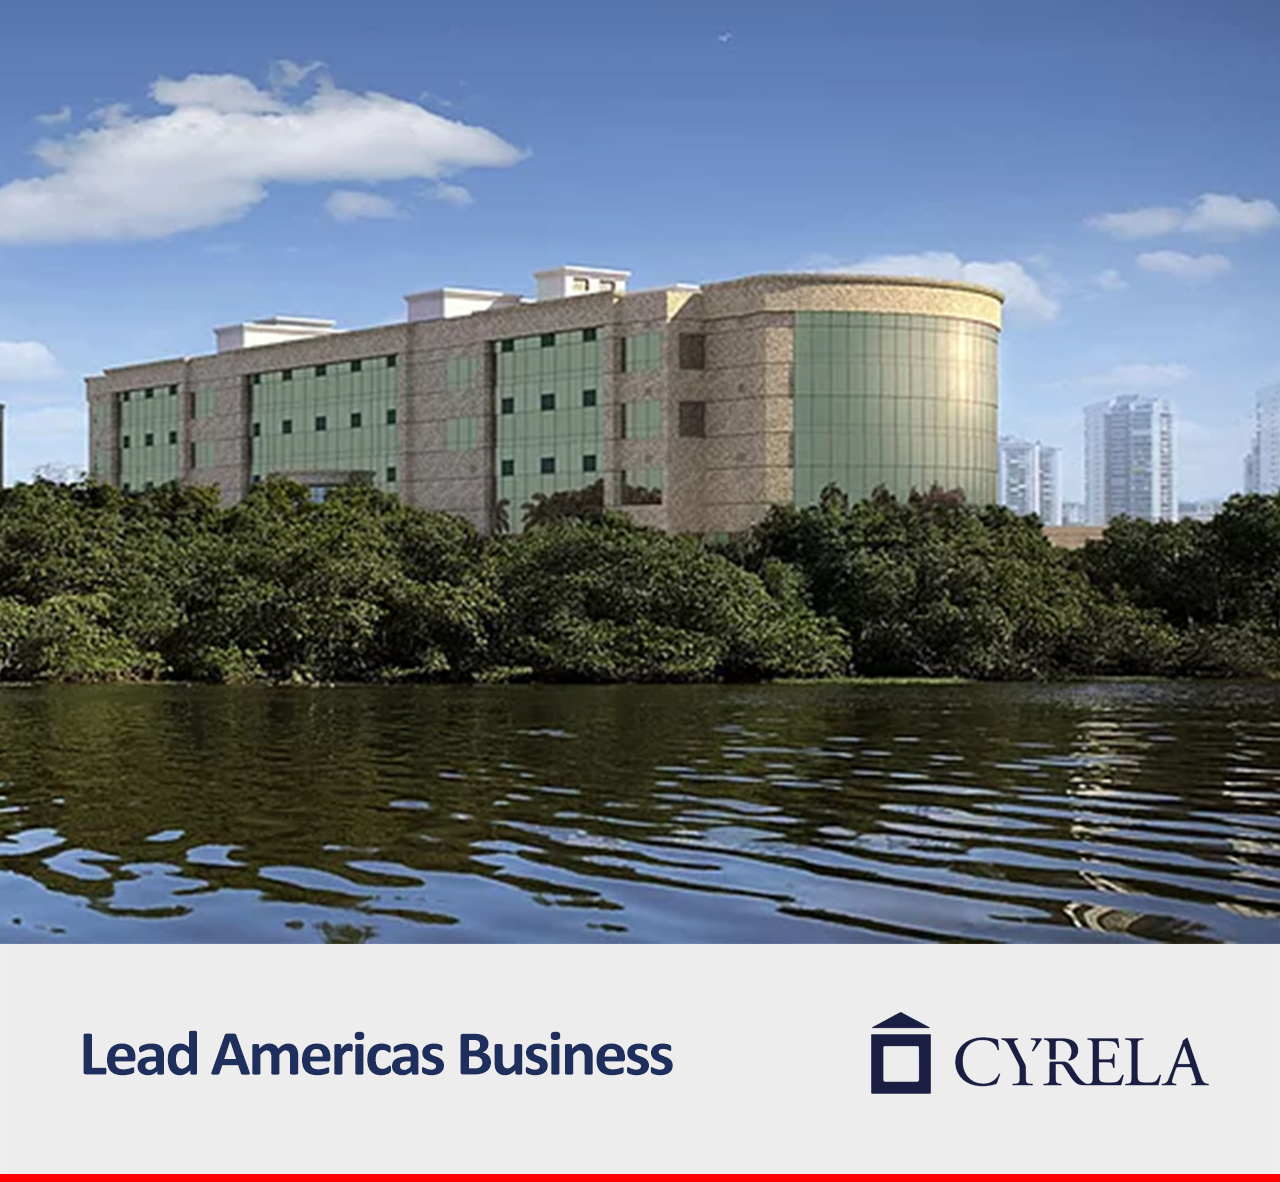 Lead Americas Business